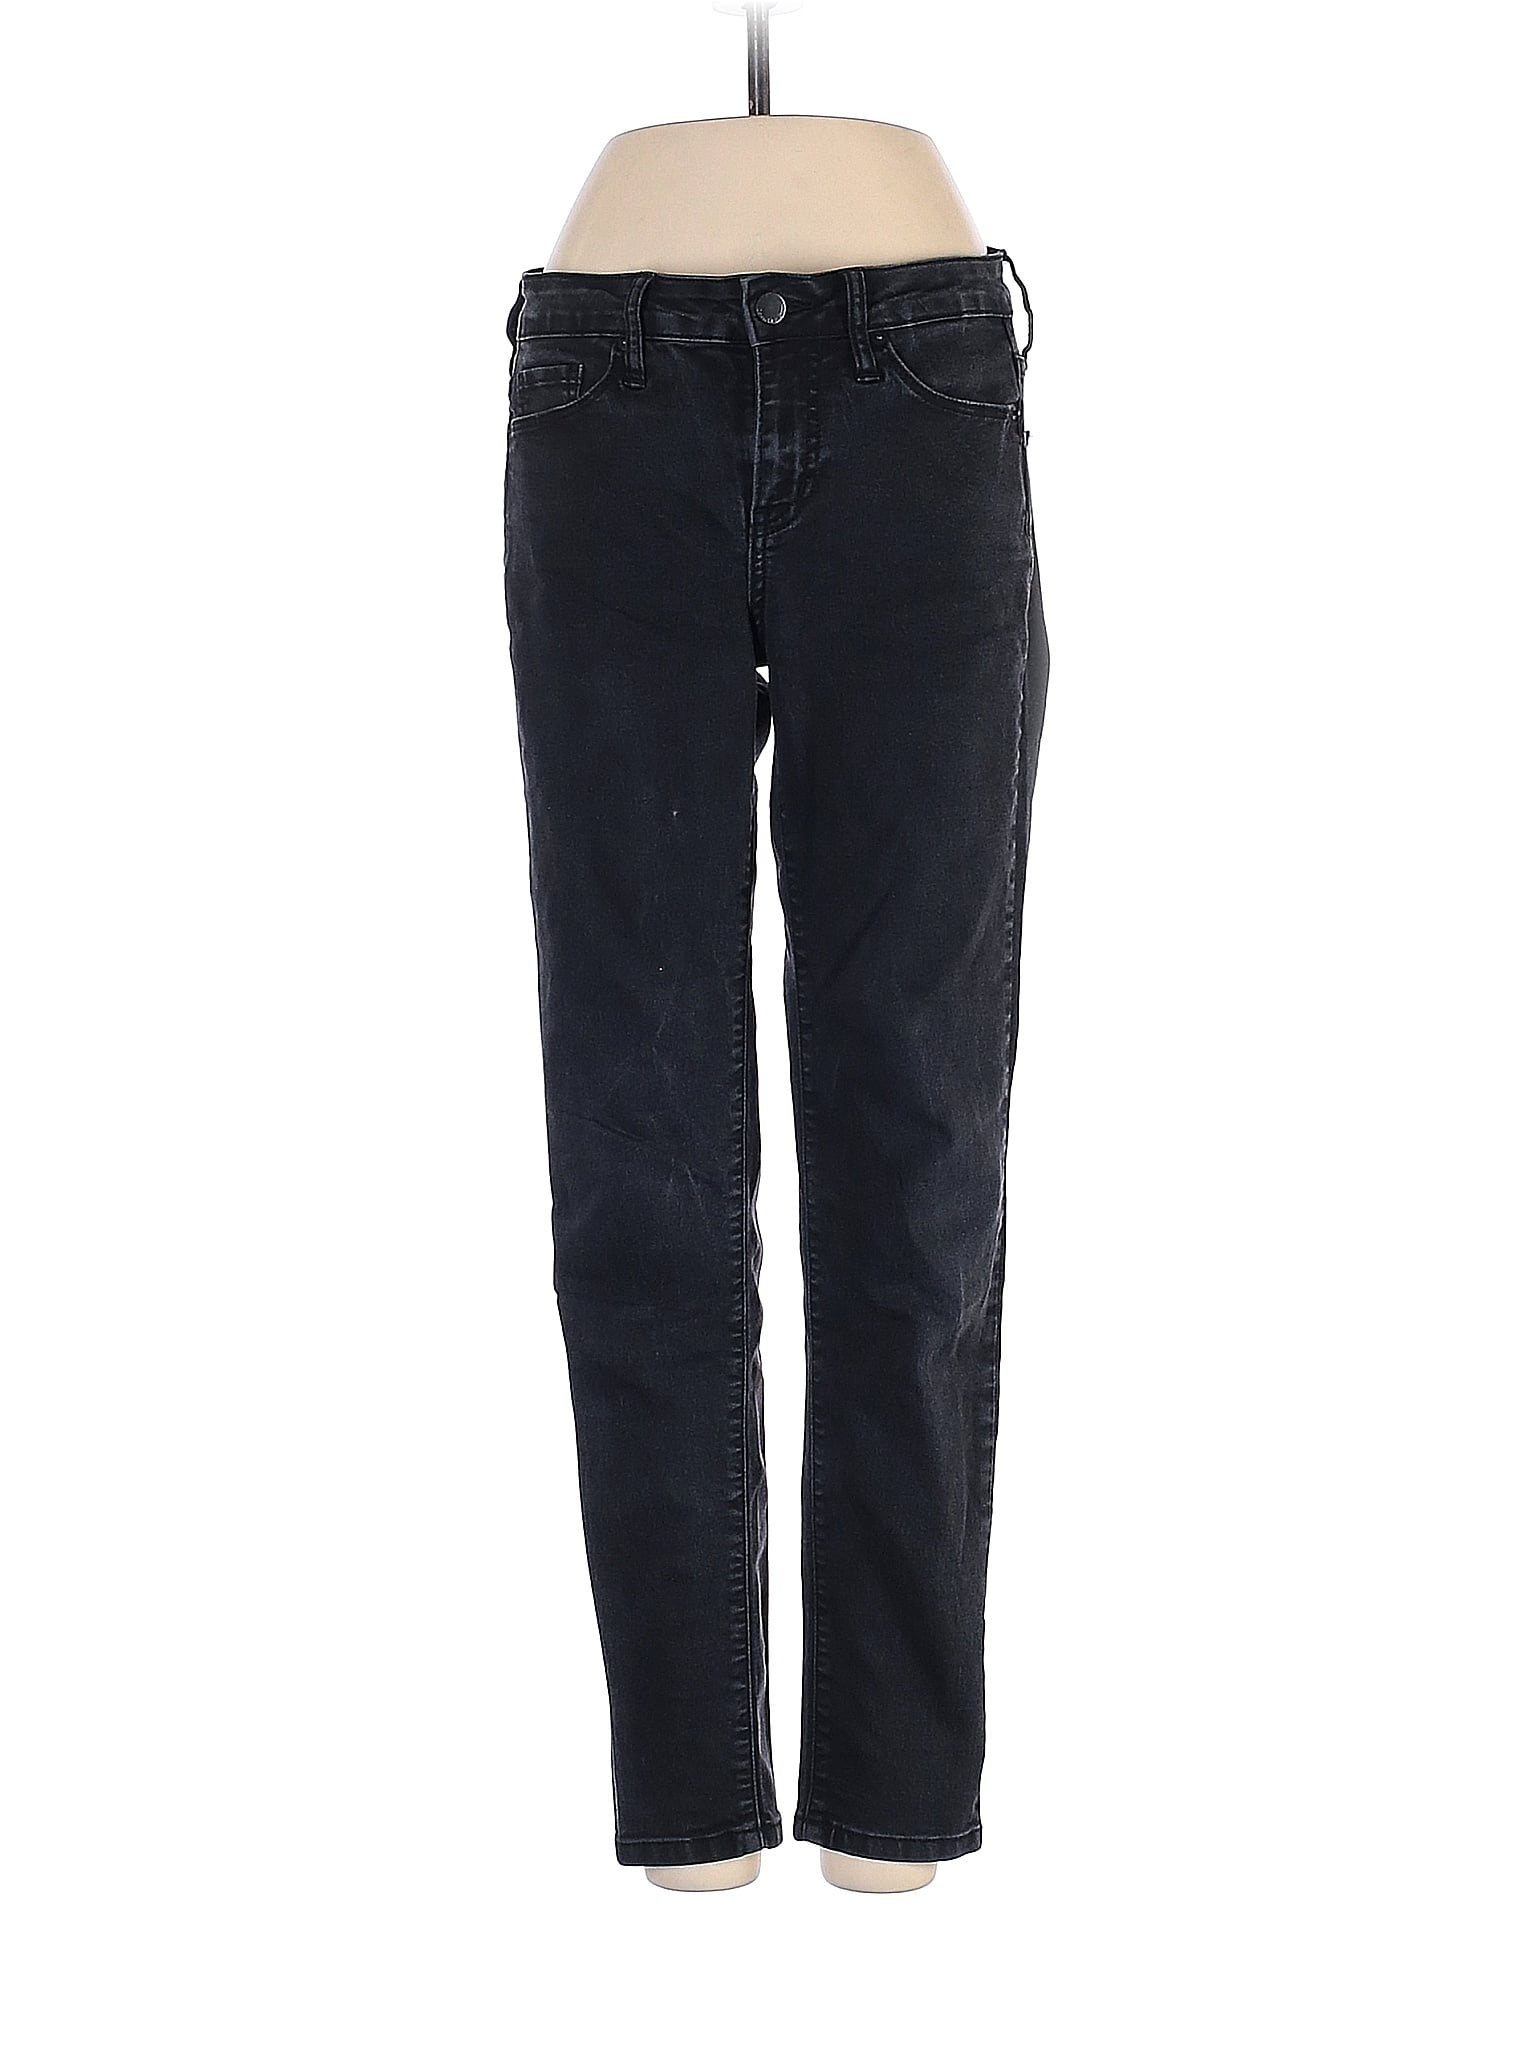 CALVIN KLEIN JEANS Solid Black Blue Jeans 27 Waist - 67% off | thredUP